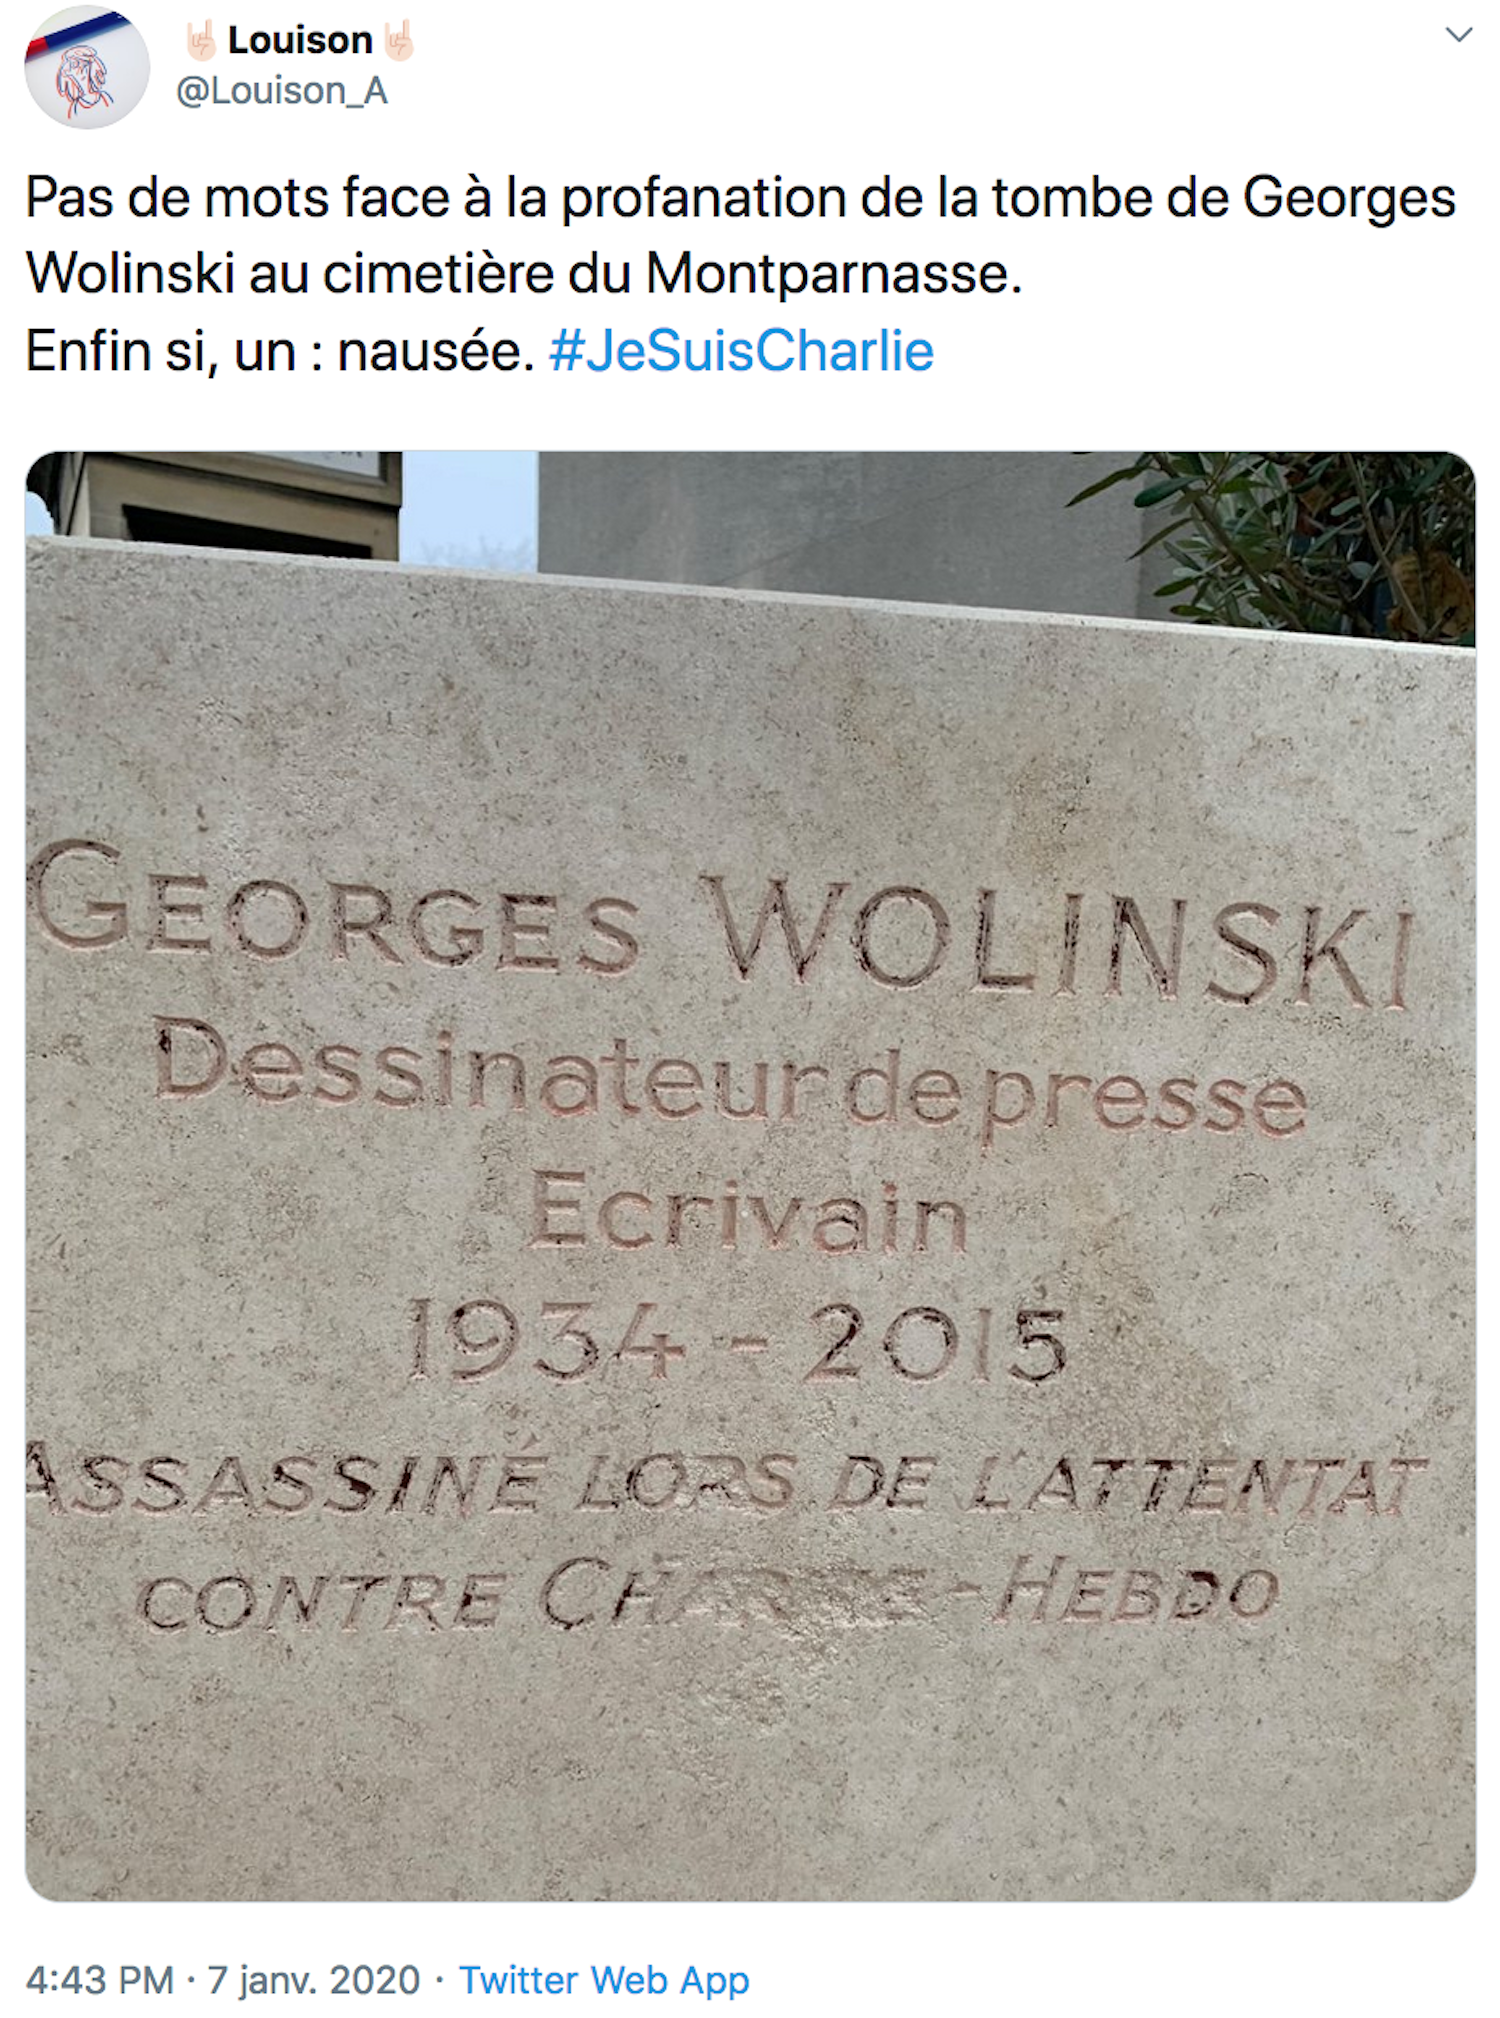 La tombe de Wolinski dégradée ?